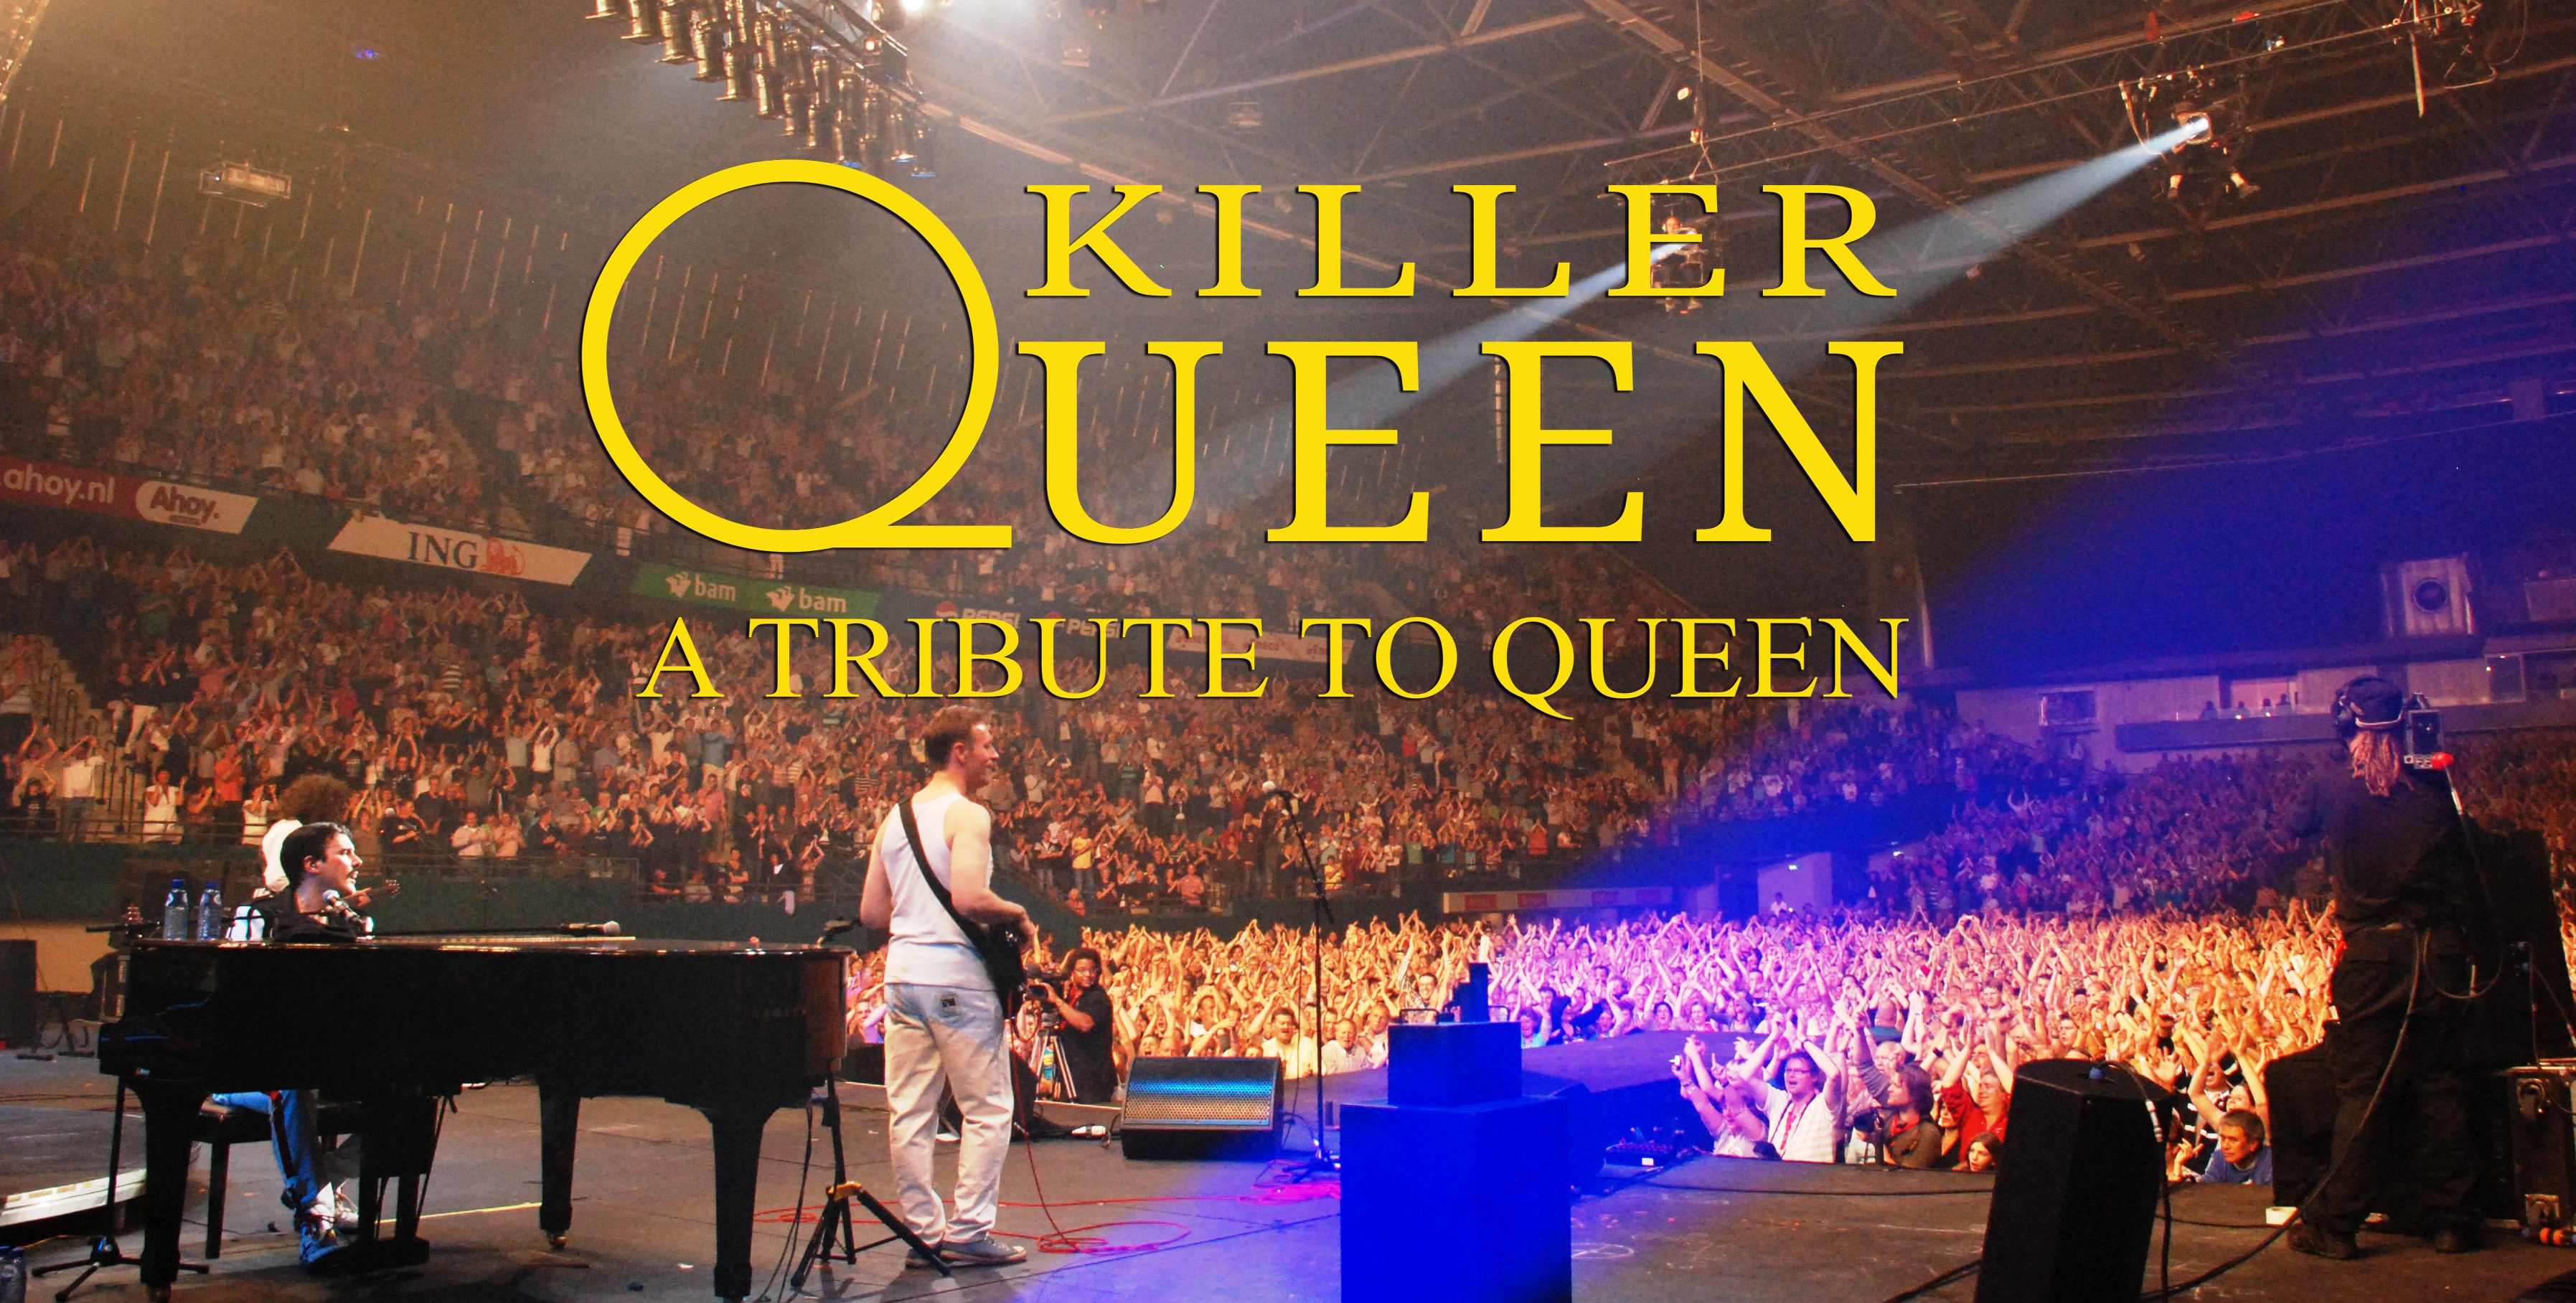 Queen Bohemian Rhapsody - 50 Years On! - Crown Perth